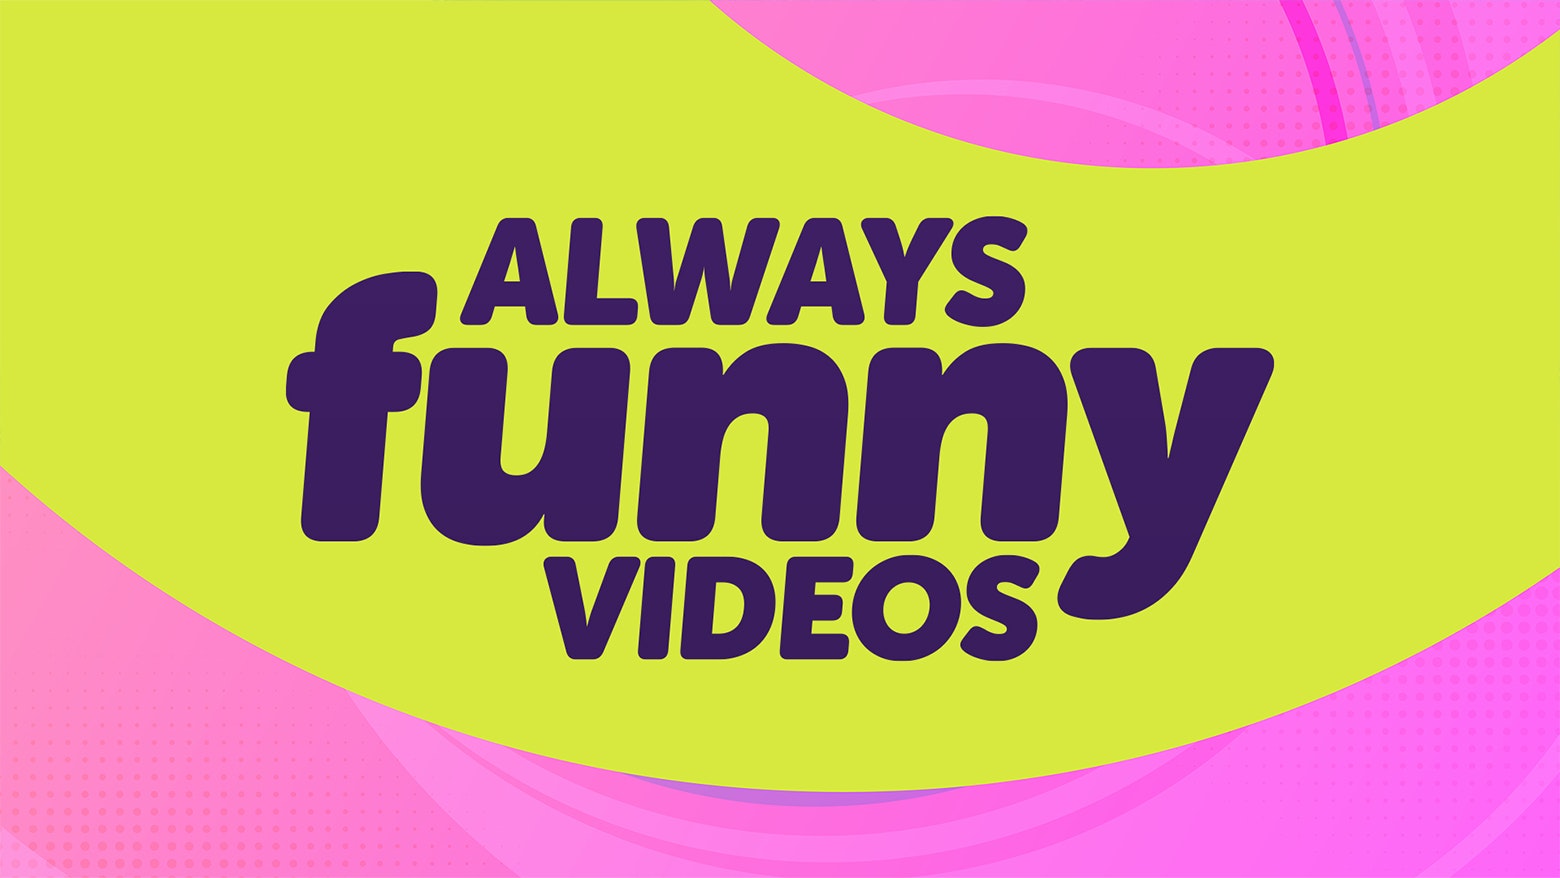 Funny Videos